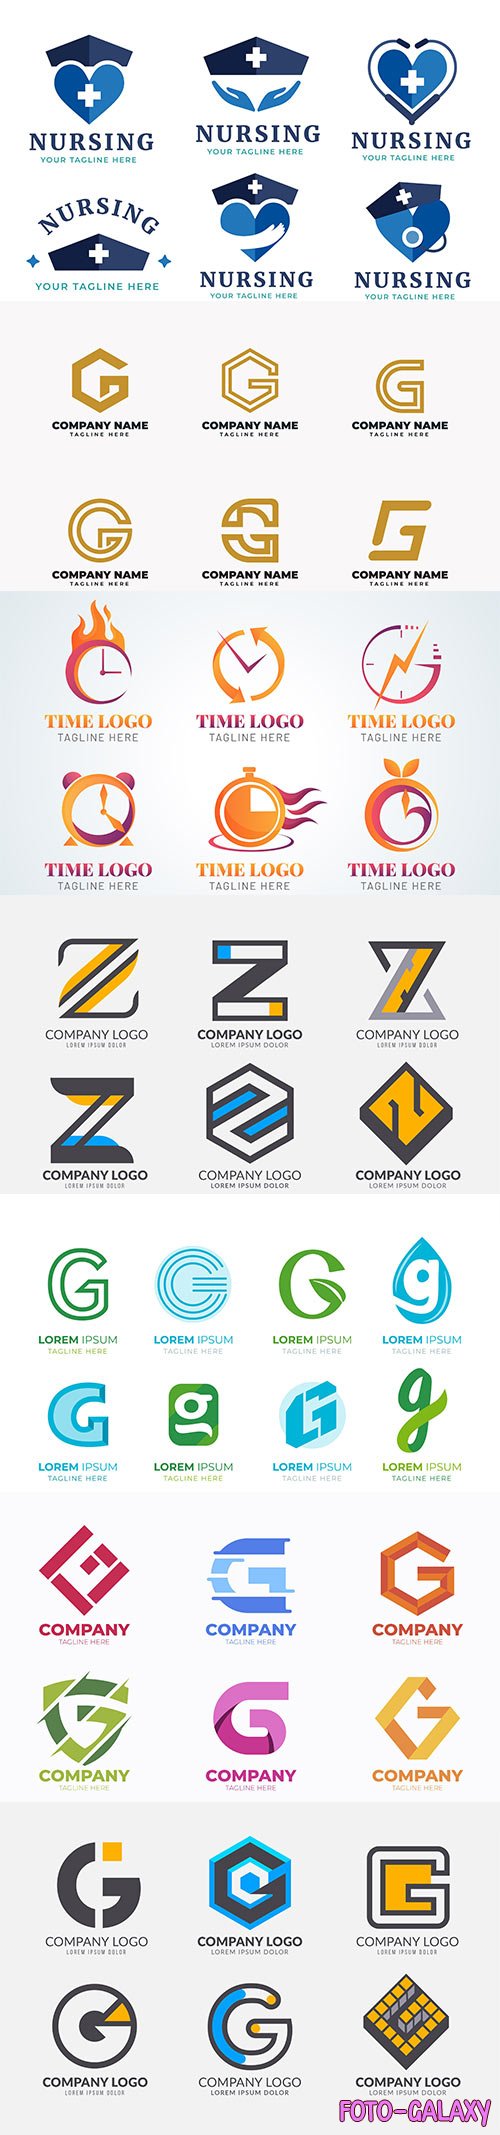 Vector logos and signs